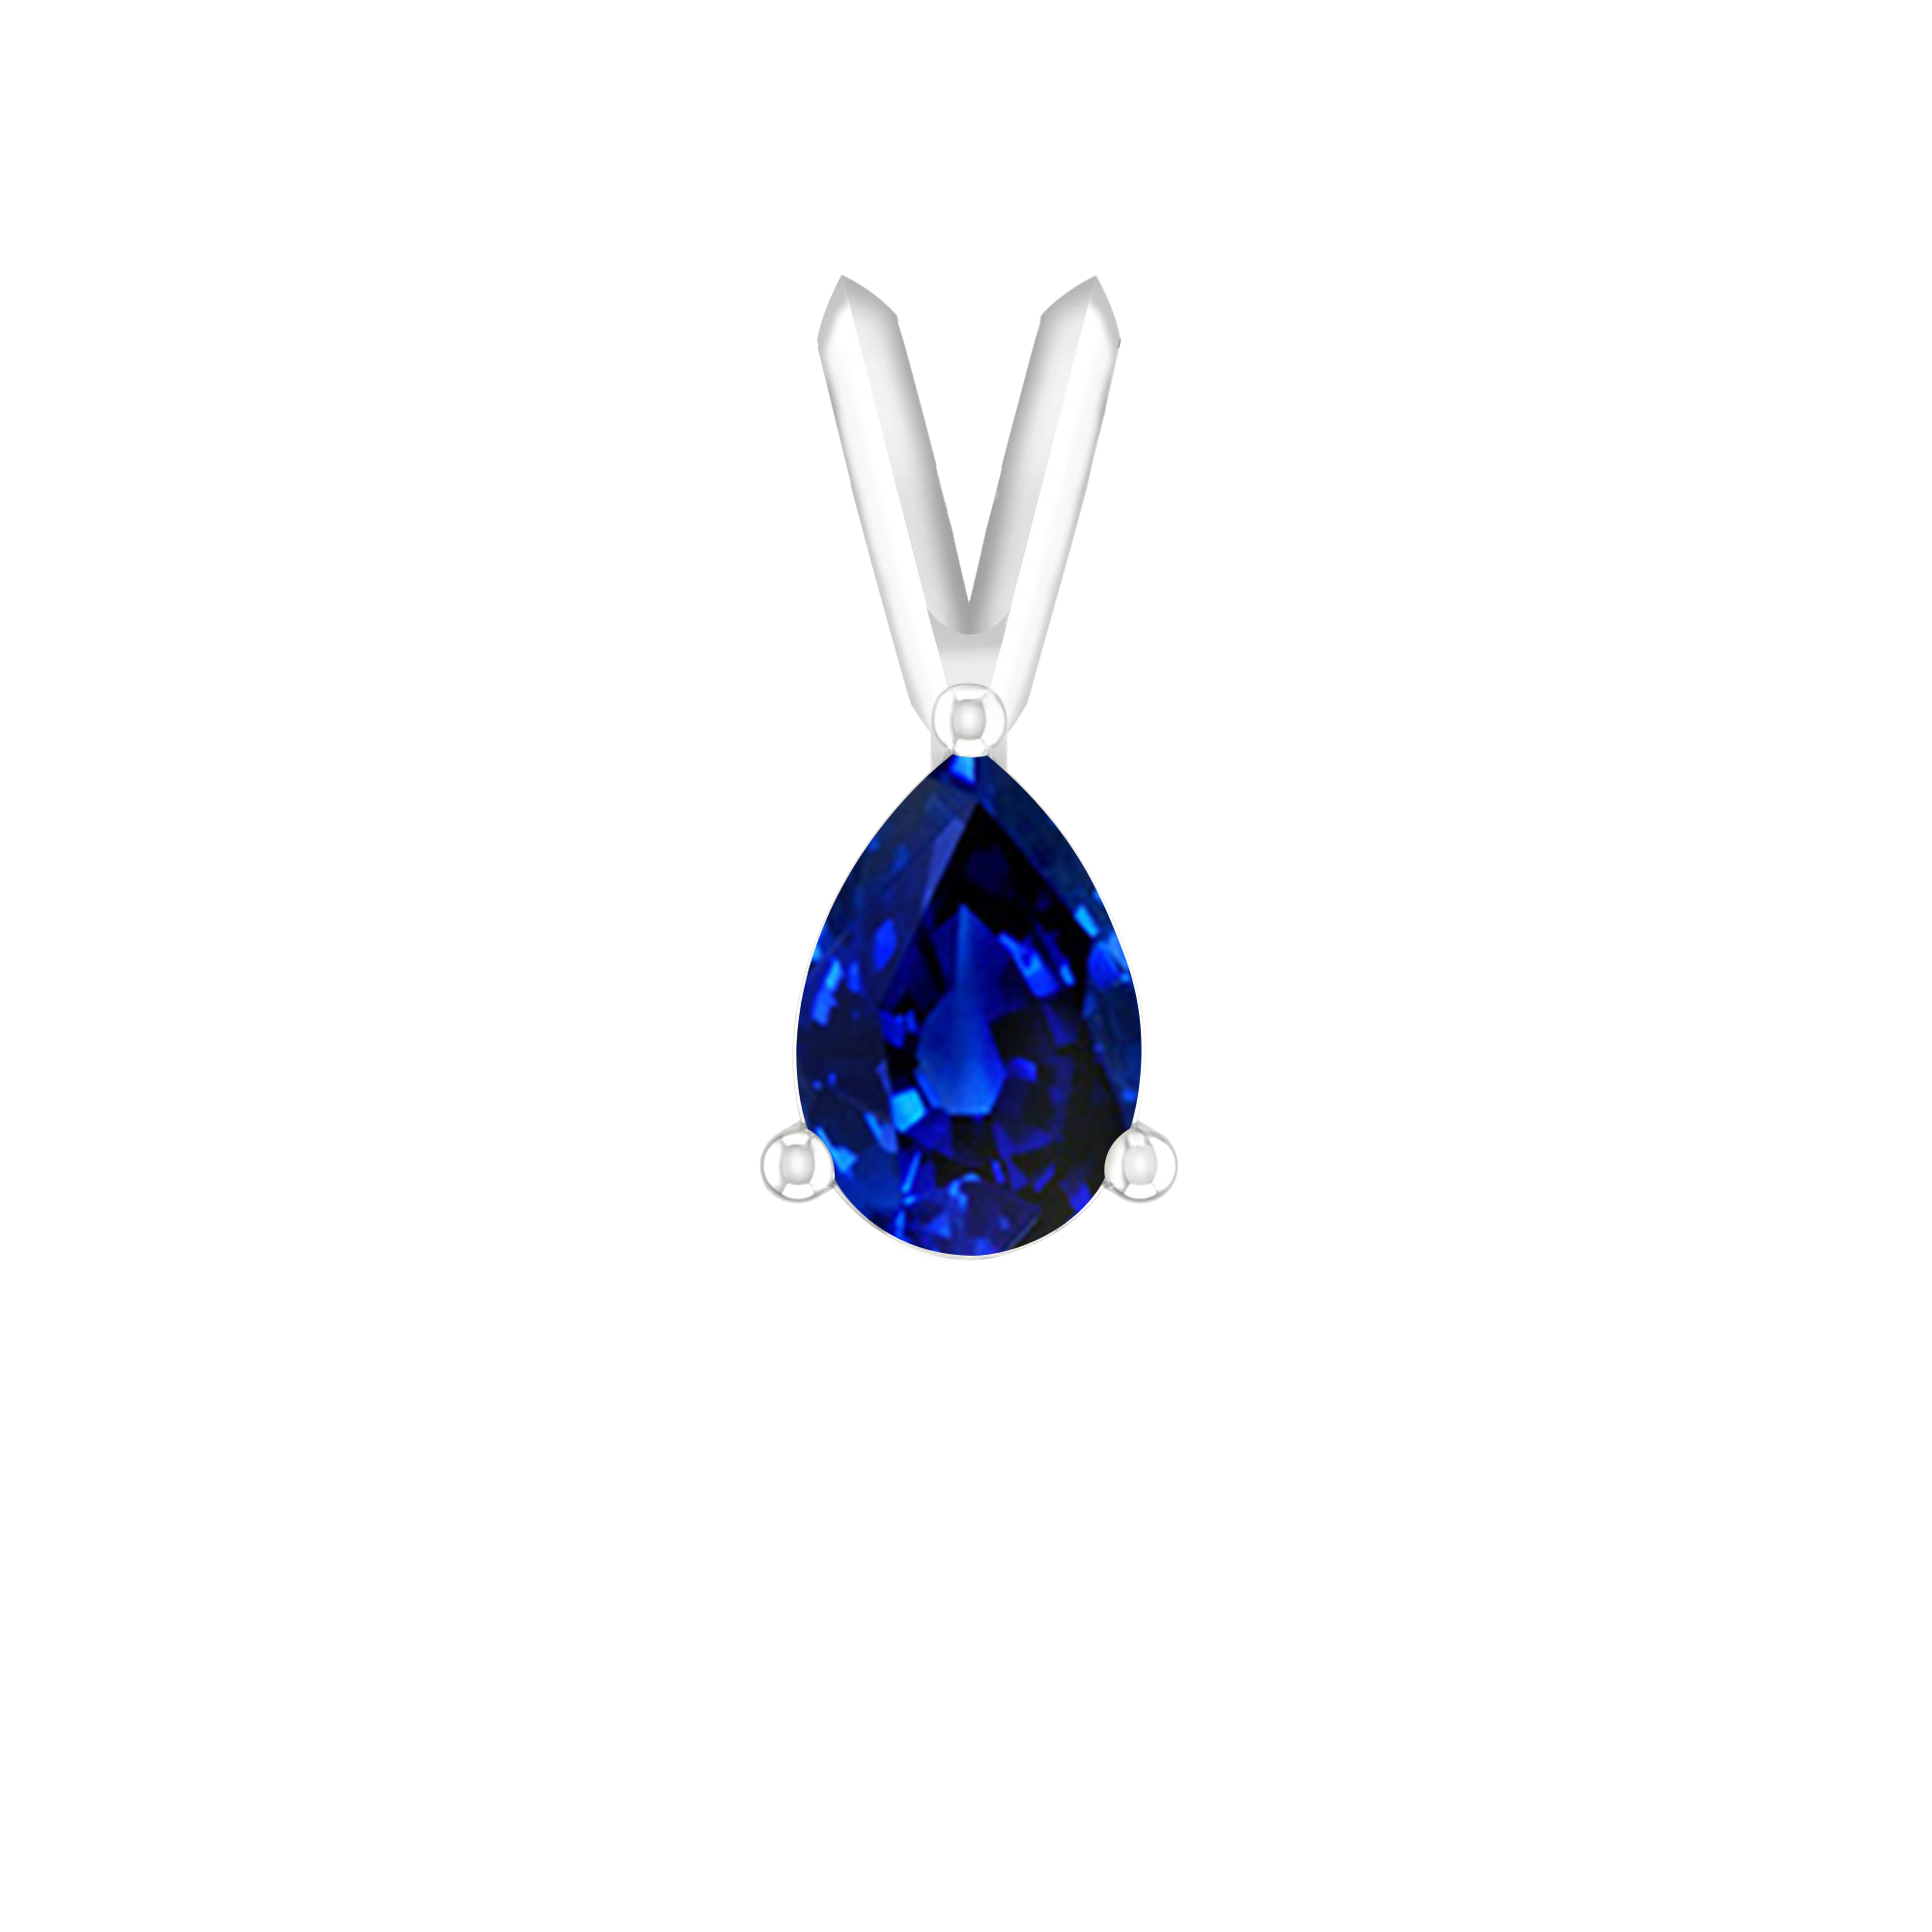 a blue gem on a black background